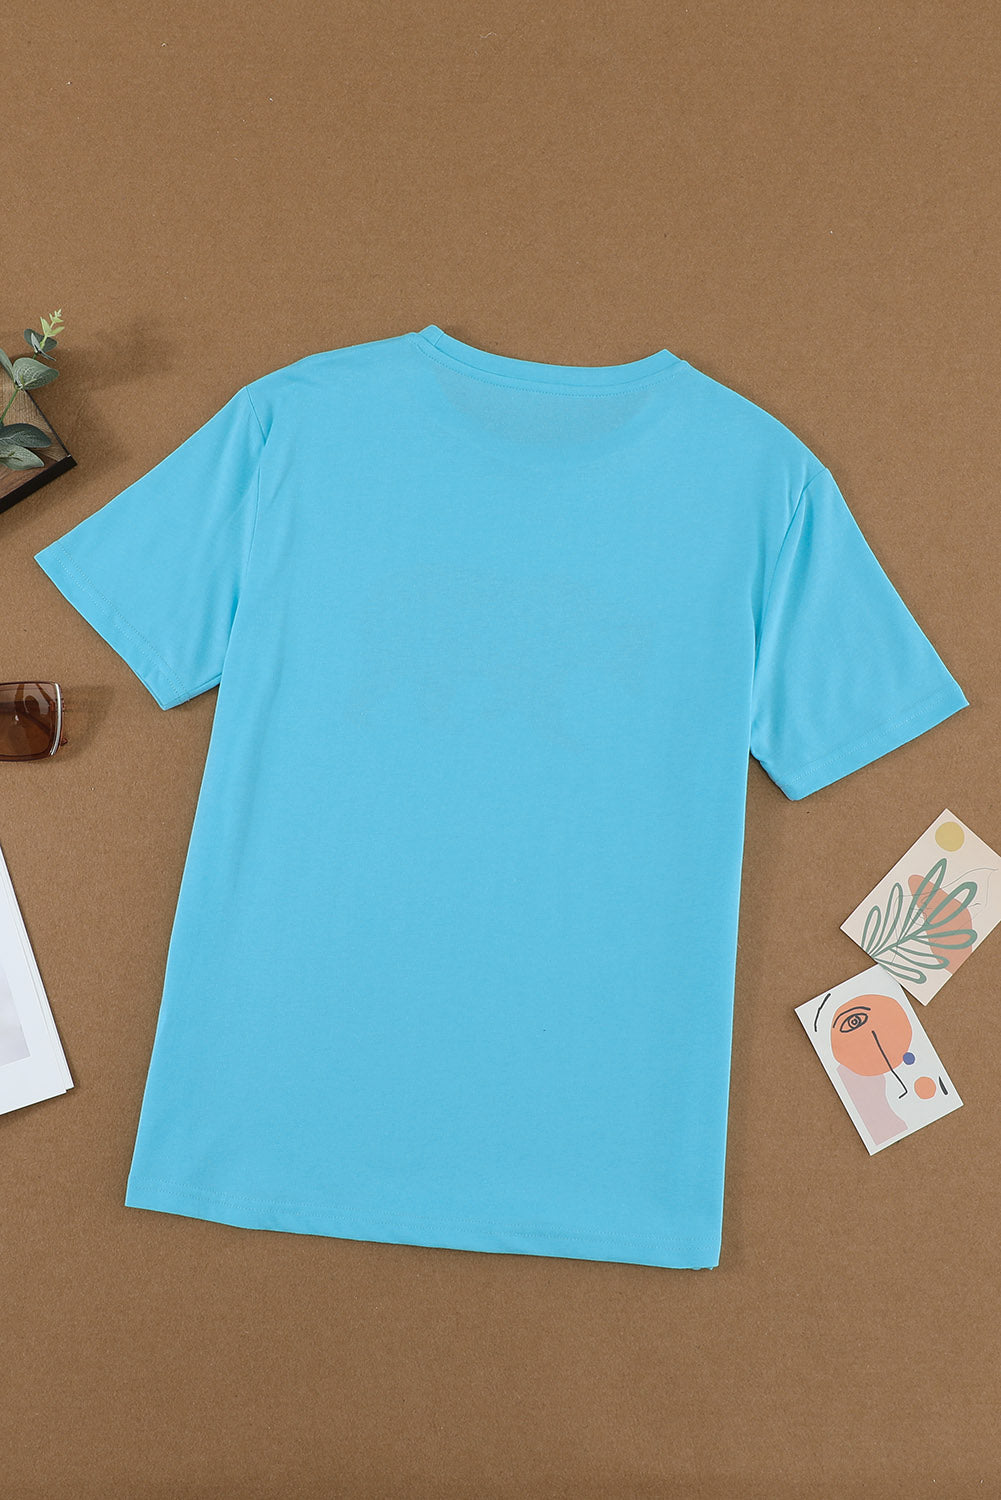 Sky Blue Mama Bear Print Crew Neck Short Sleeve T Shirts Funny Bear Graphic Mom Tee Tops LC2522590-4